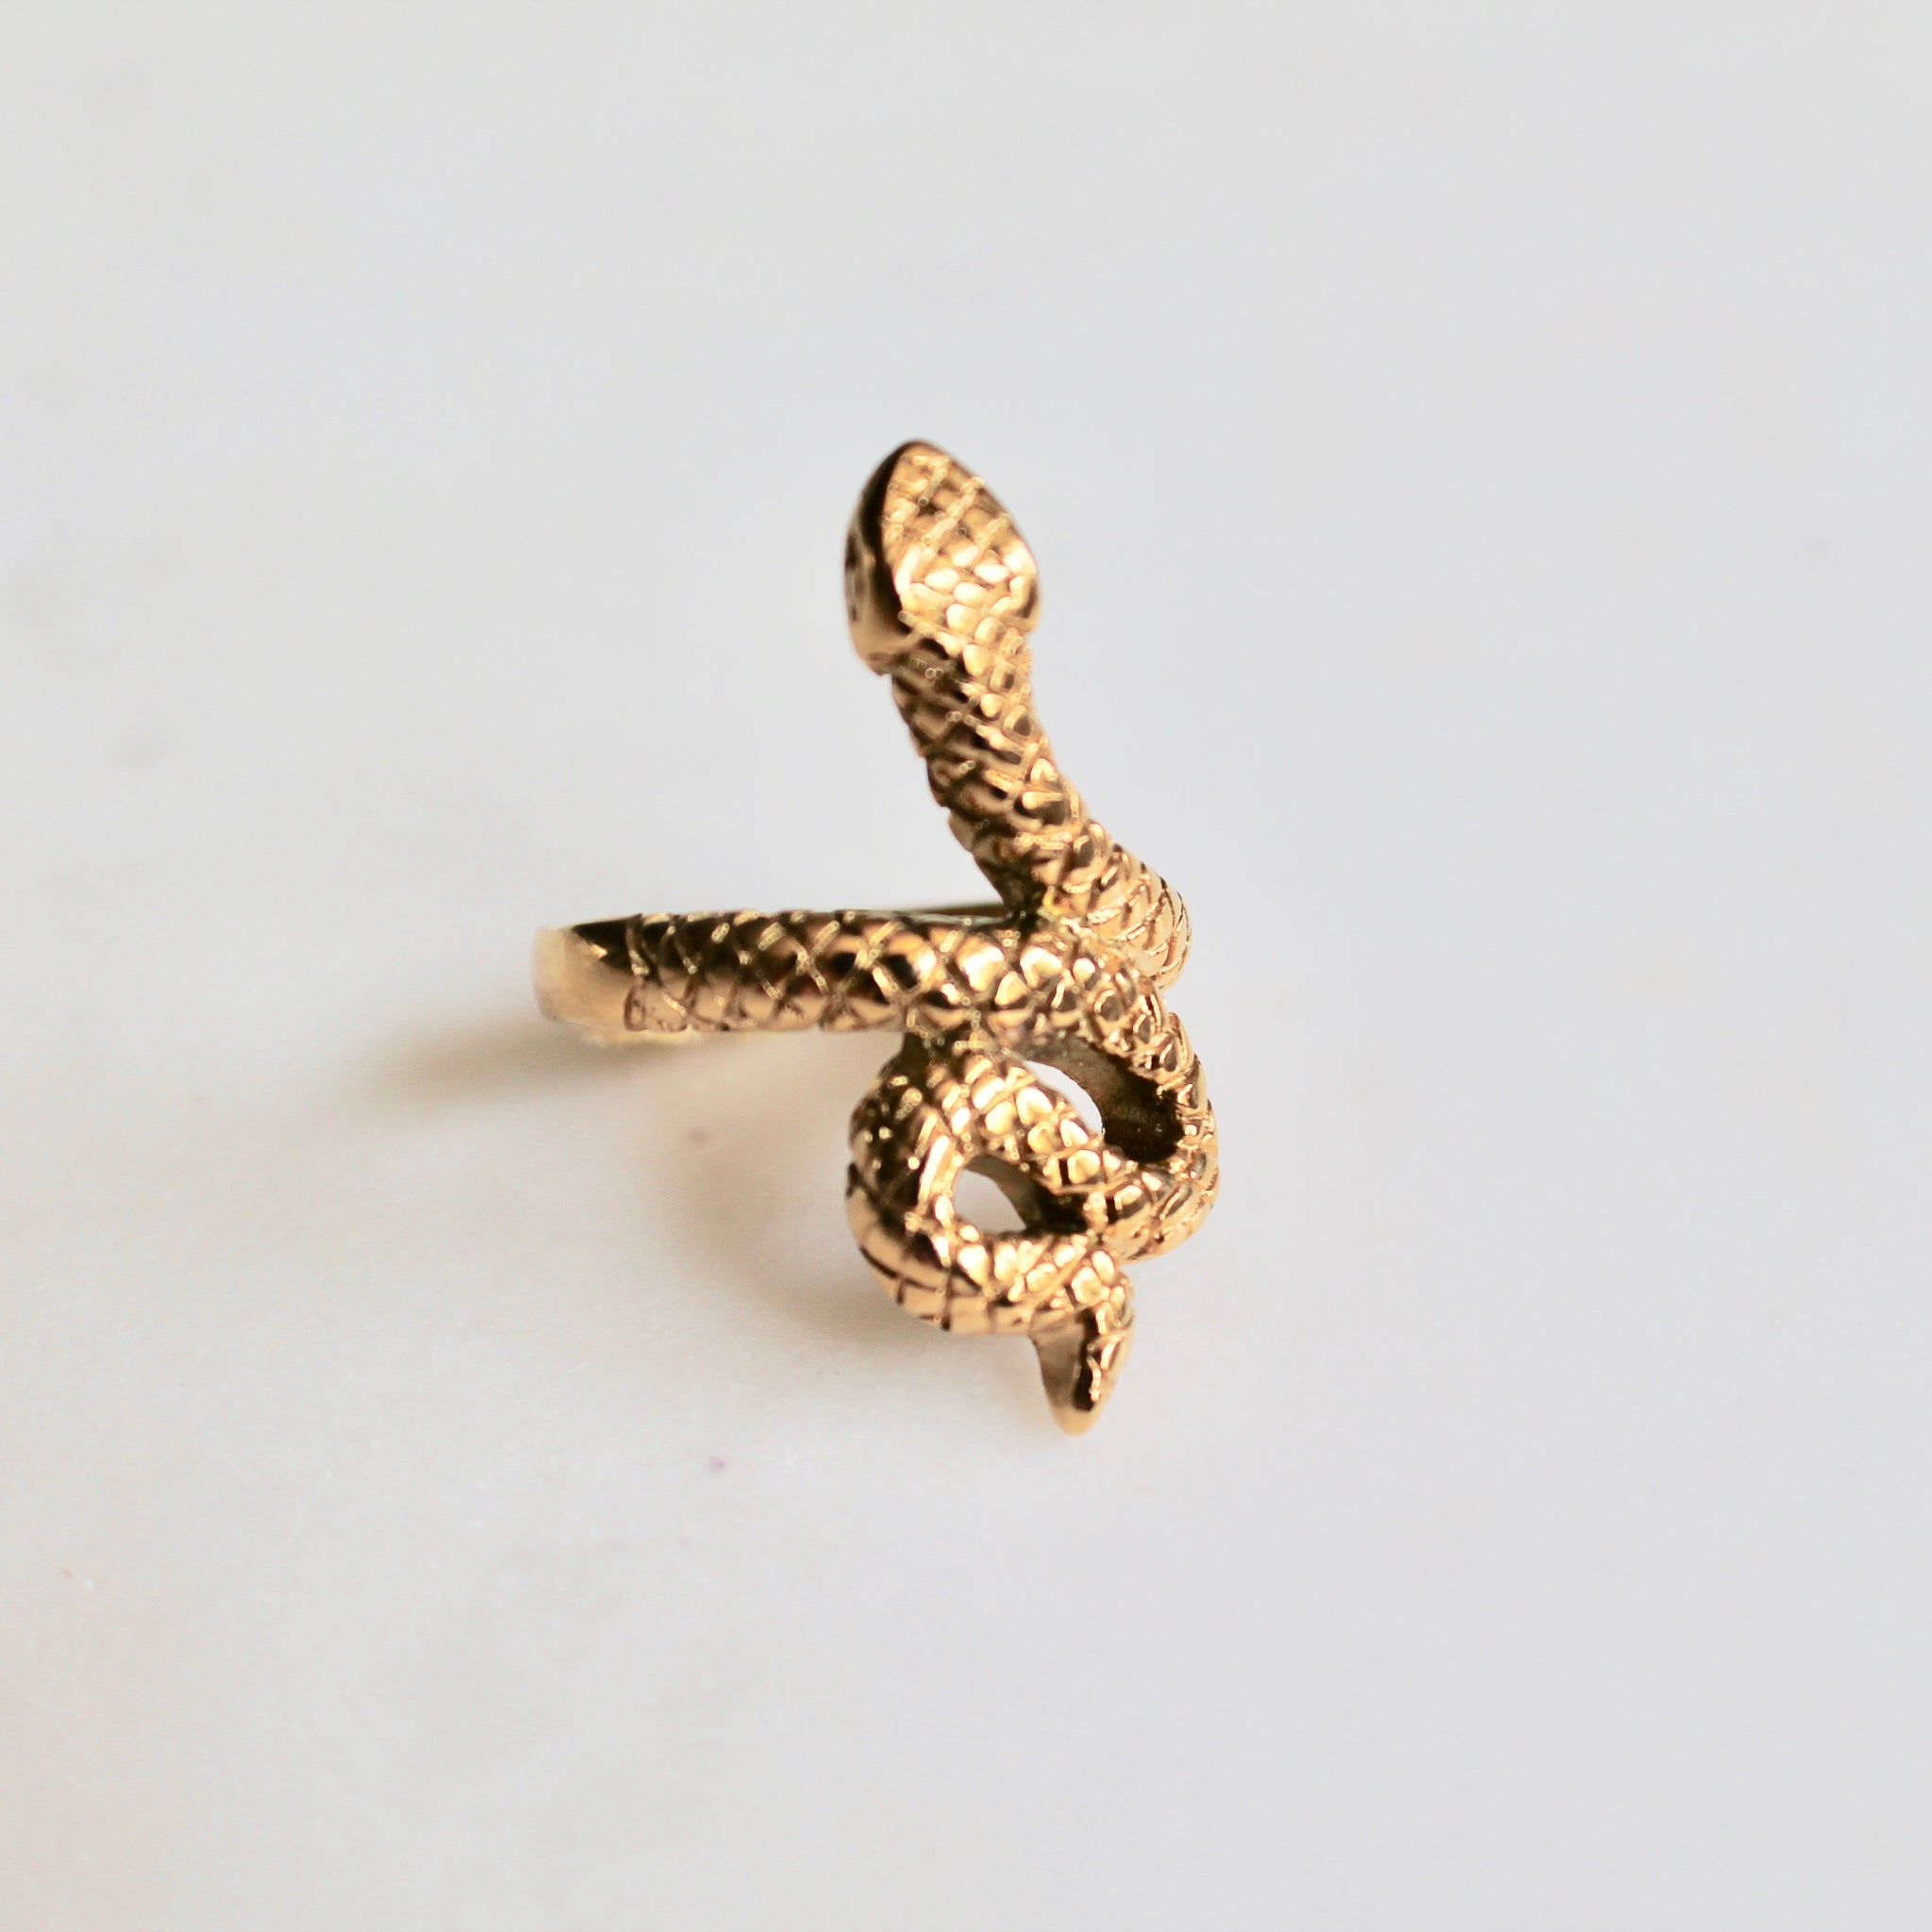 Serpent snake ring